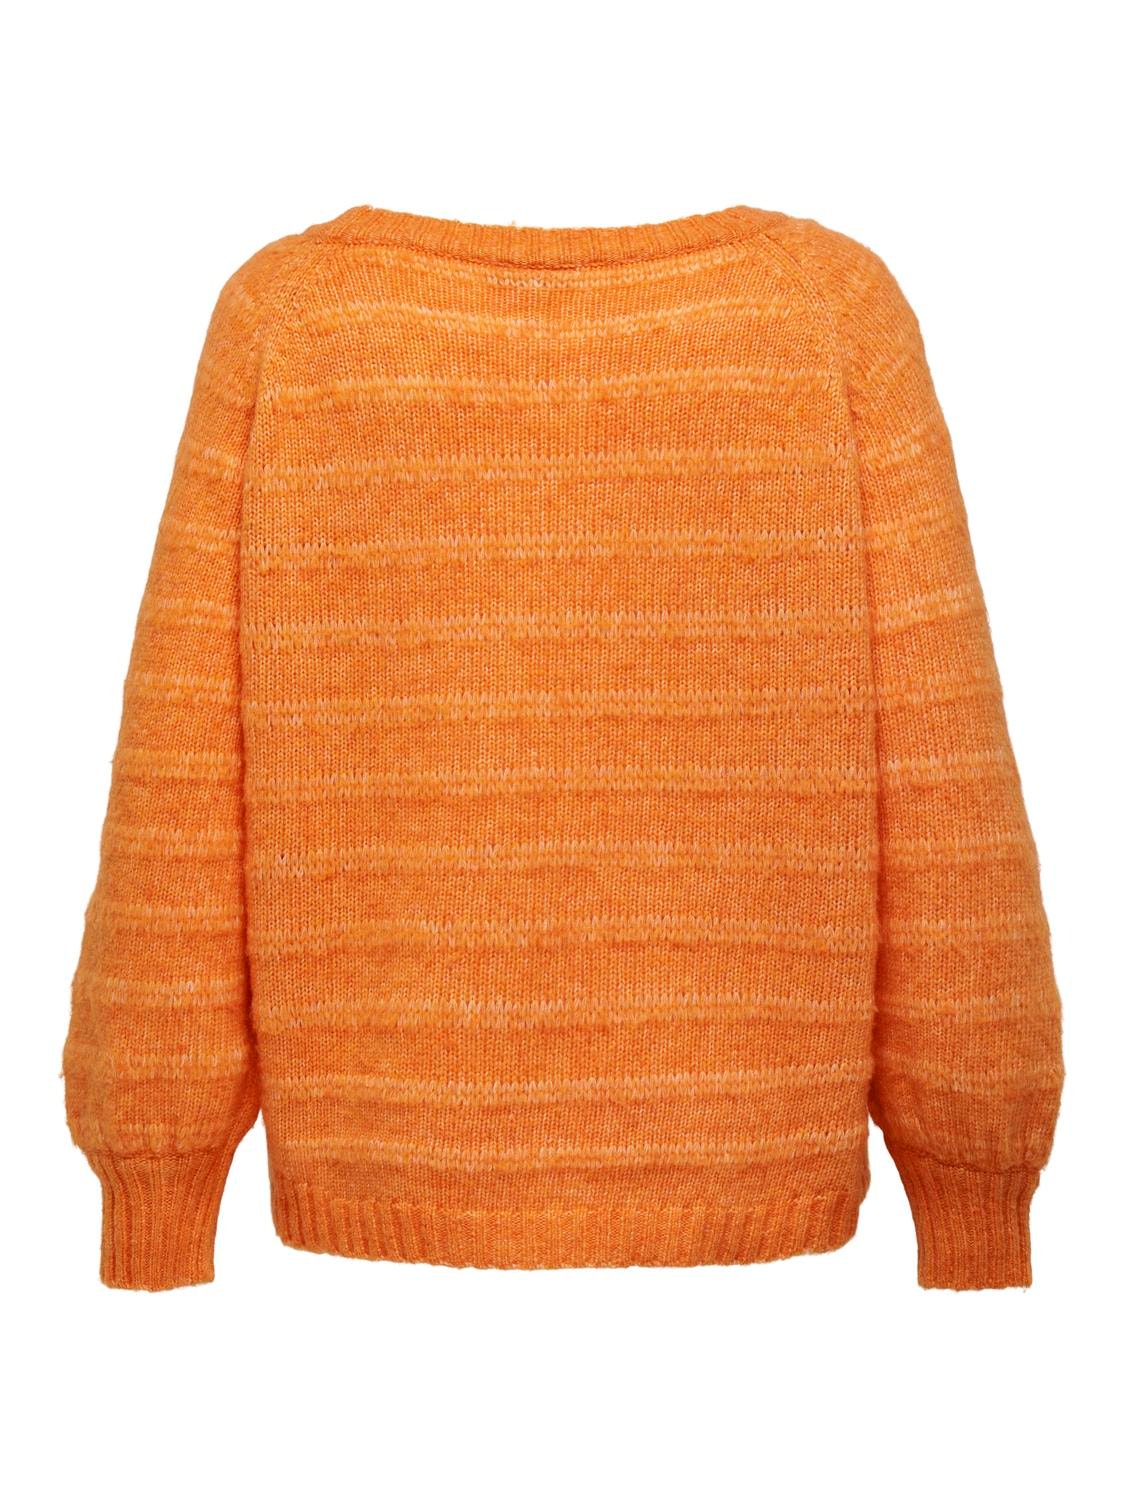 ONLY Curvy v-neck knitted pullover -Russet Orange - 15296175